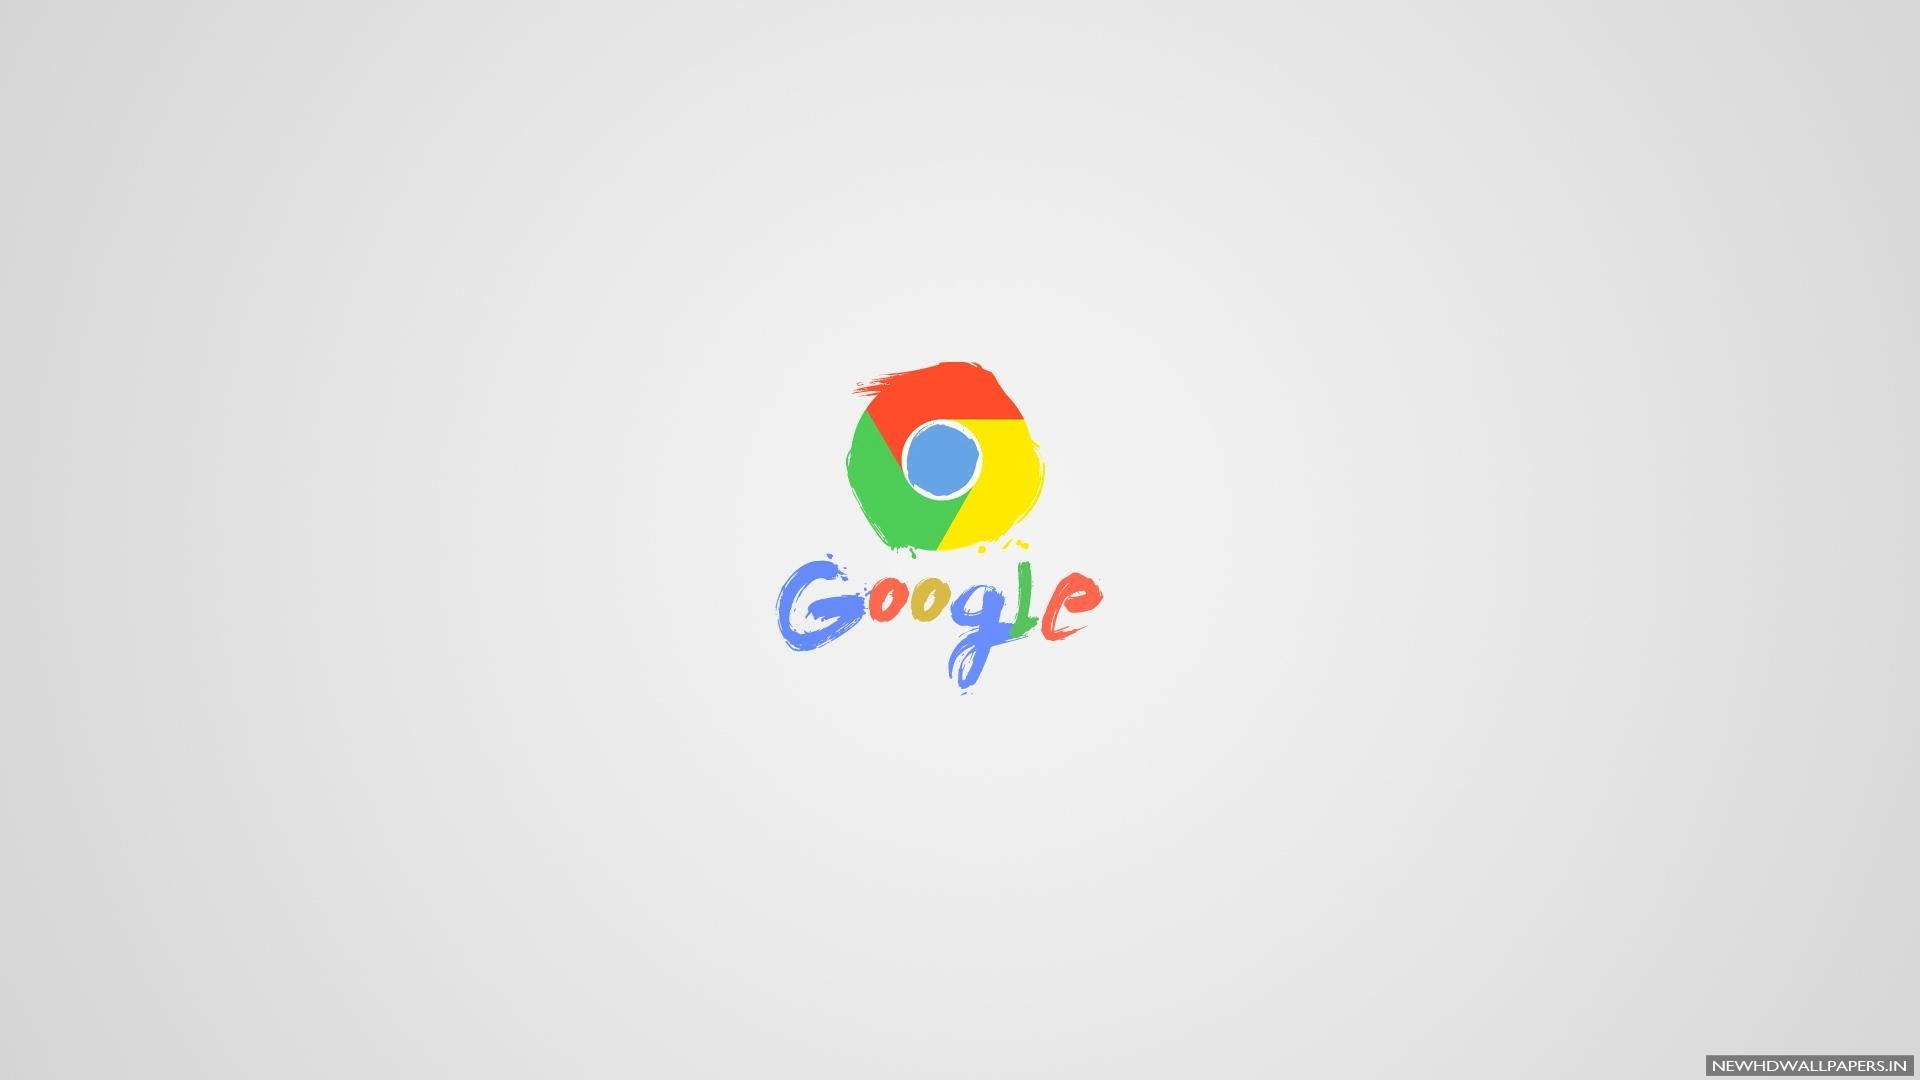 Google Brand Logo Browser Search Engine Wallpaper New HD